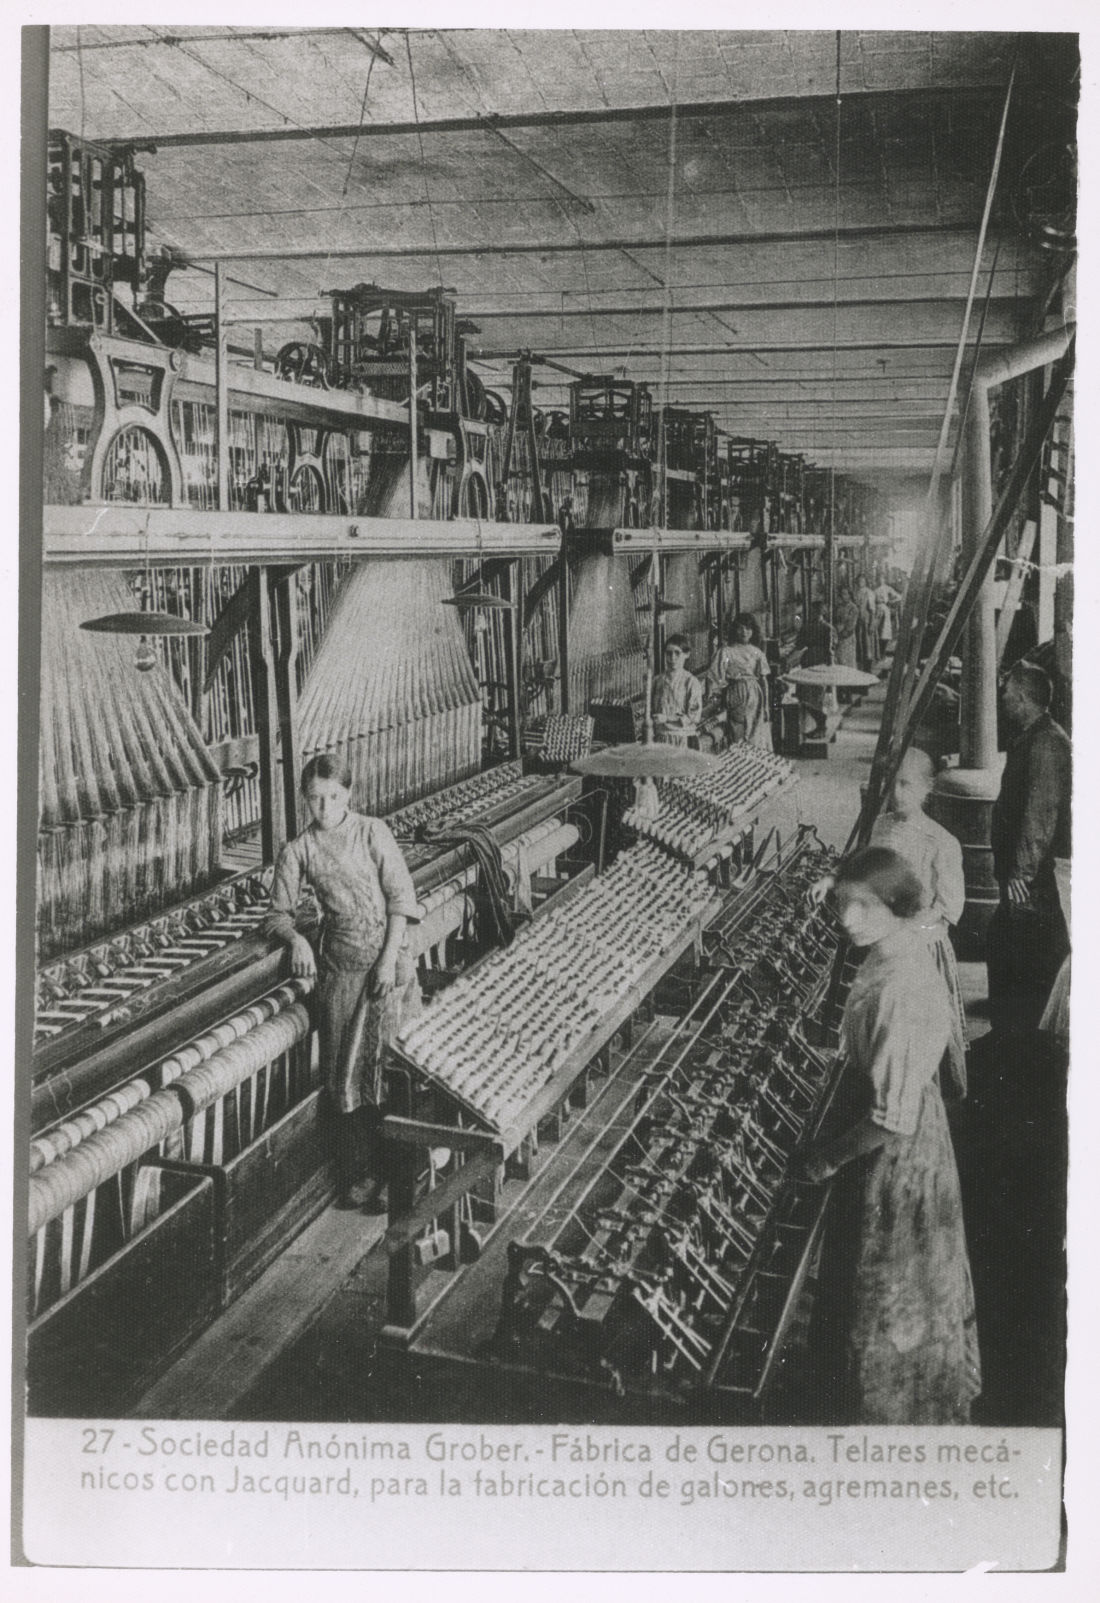 factories in the 1800s